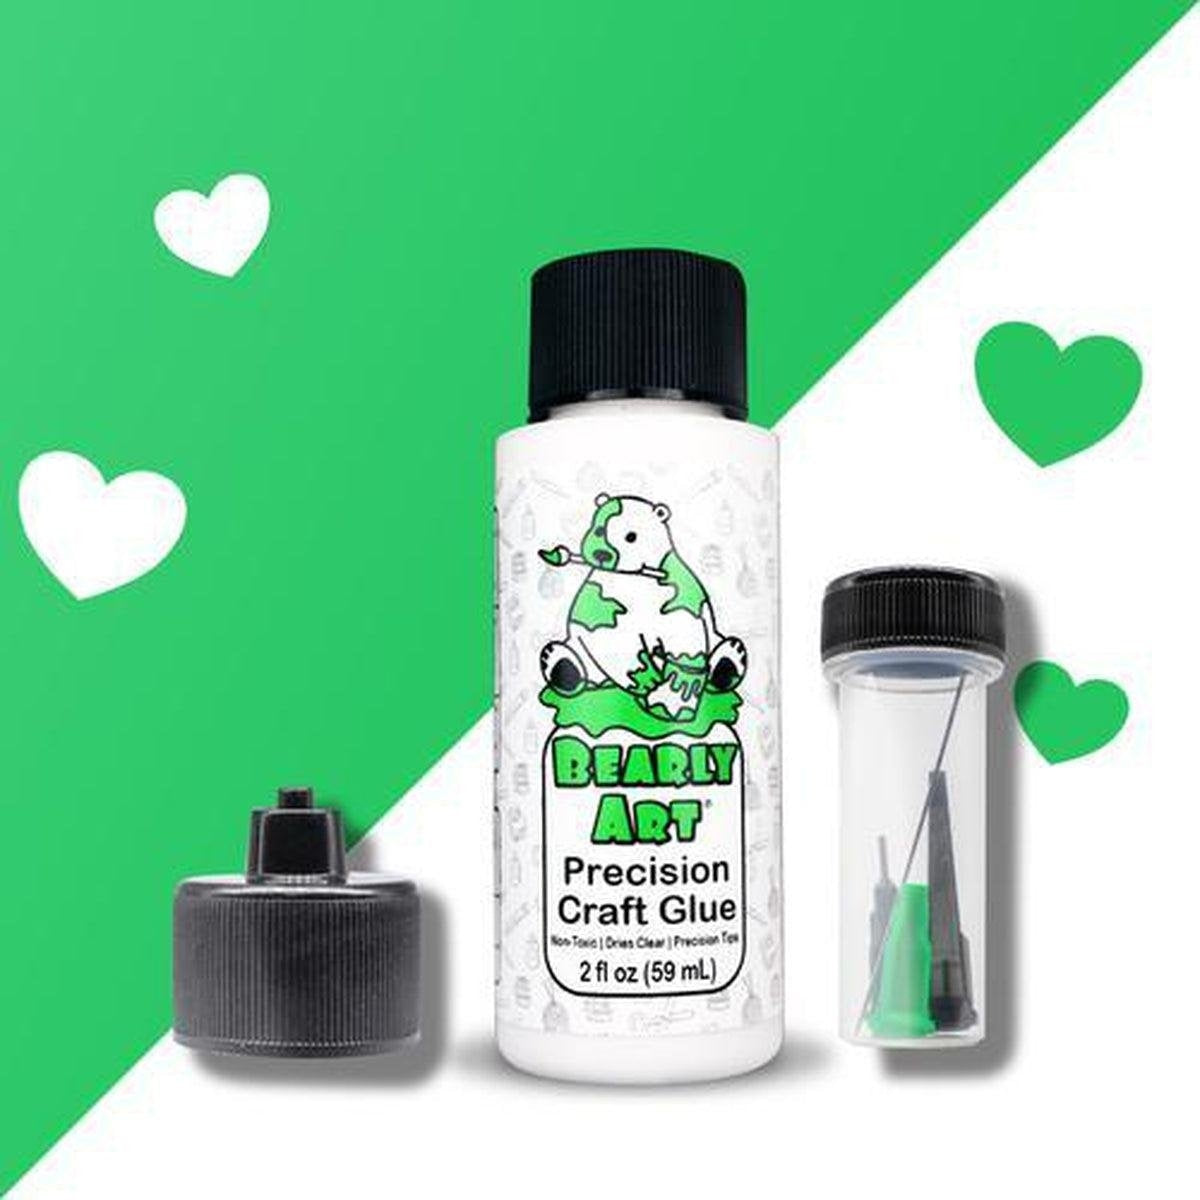 Bearly Art Precision Craft Glue - THE MINI - Kat Scrappiness